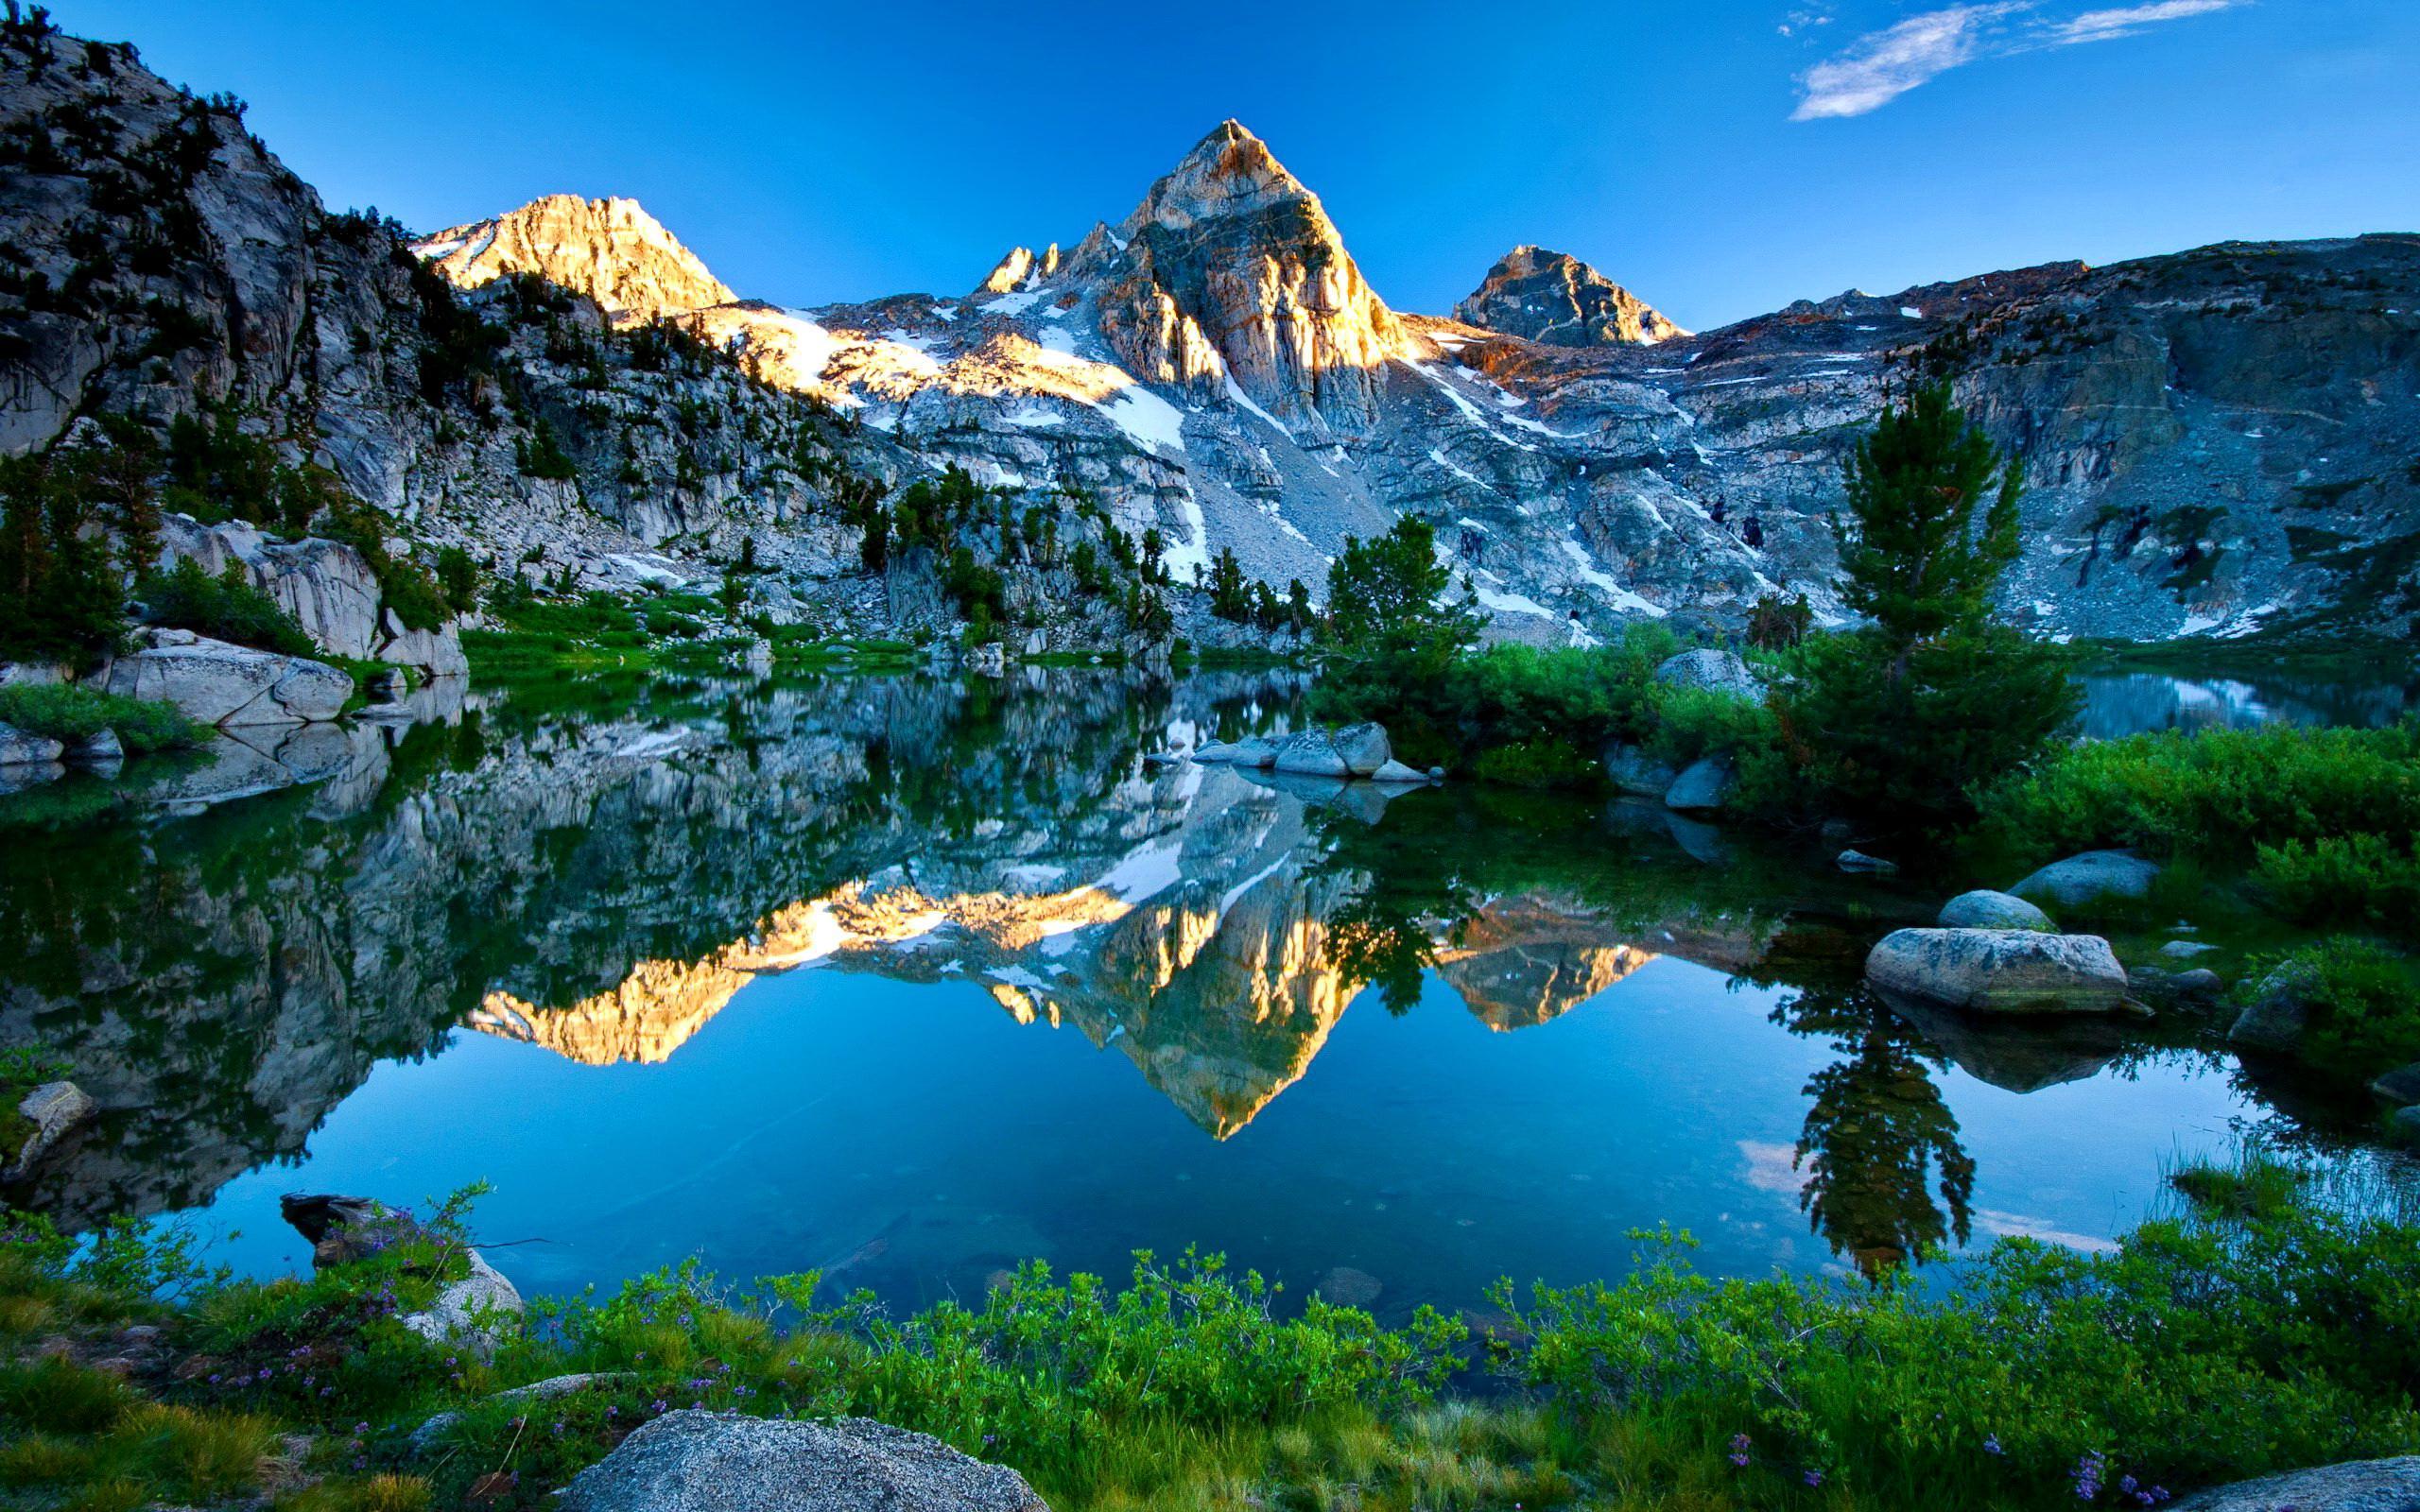 Mountain Reflection In The Lake HD desktop wallpaper, Widescreen, High Definition